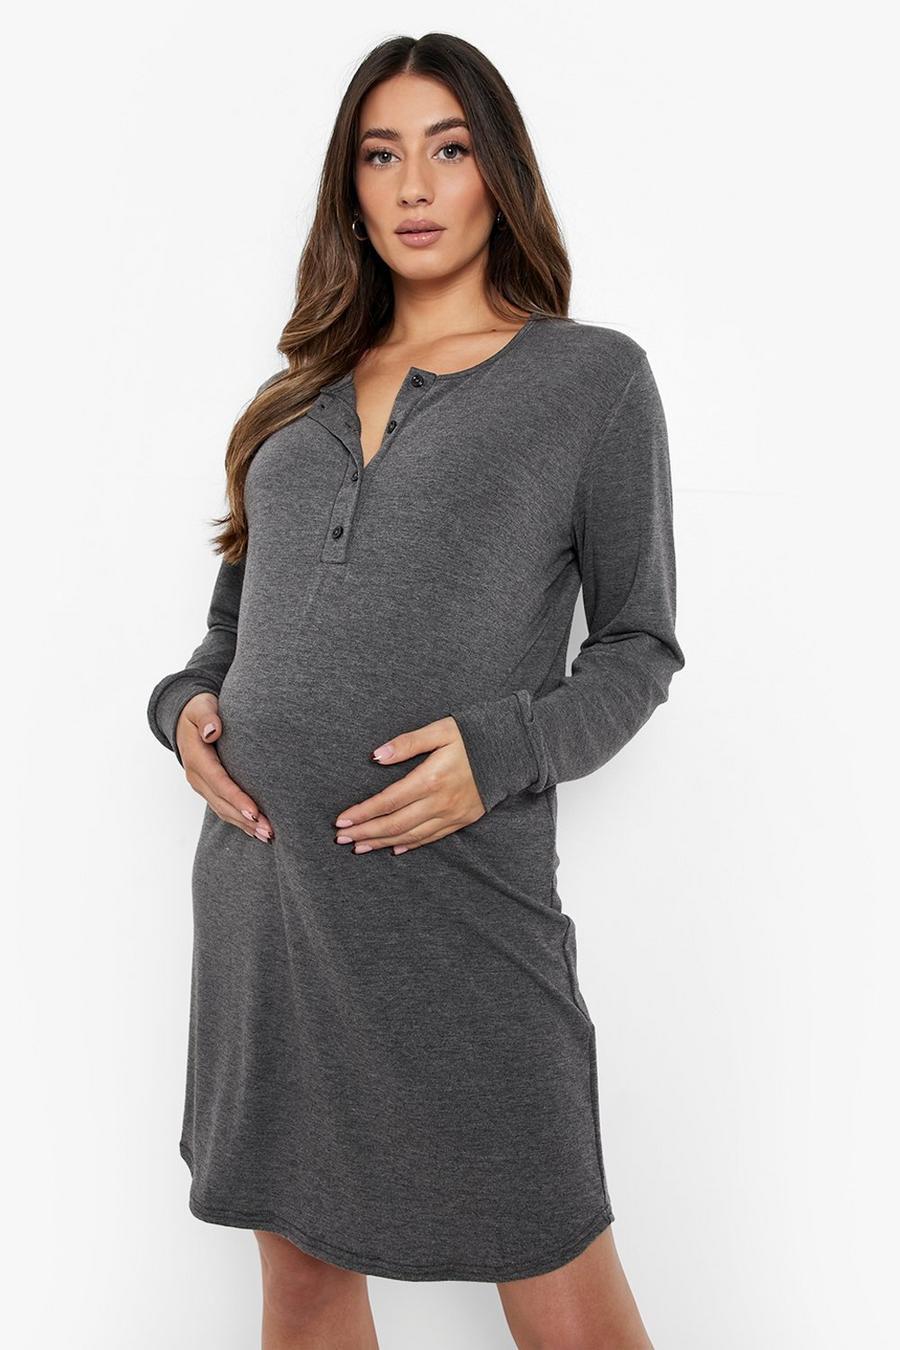 Grey marl Maternity Long Sleeve Half Button Nightgown